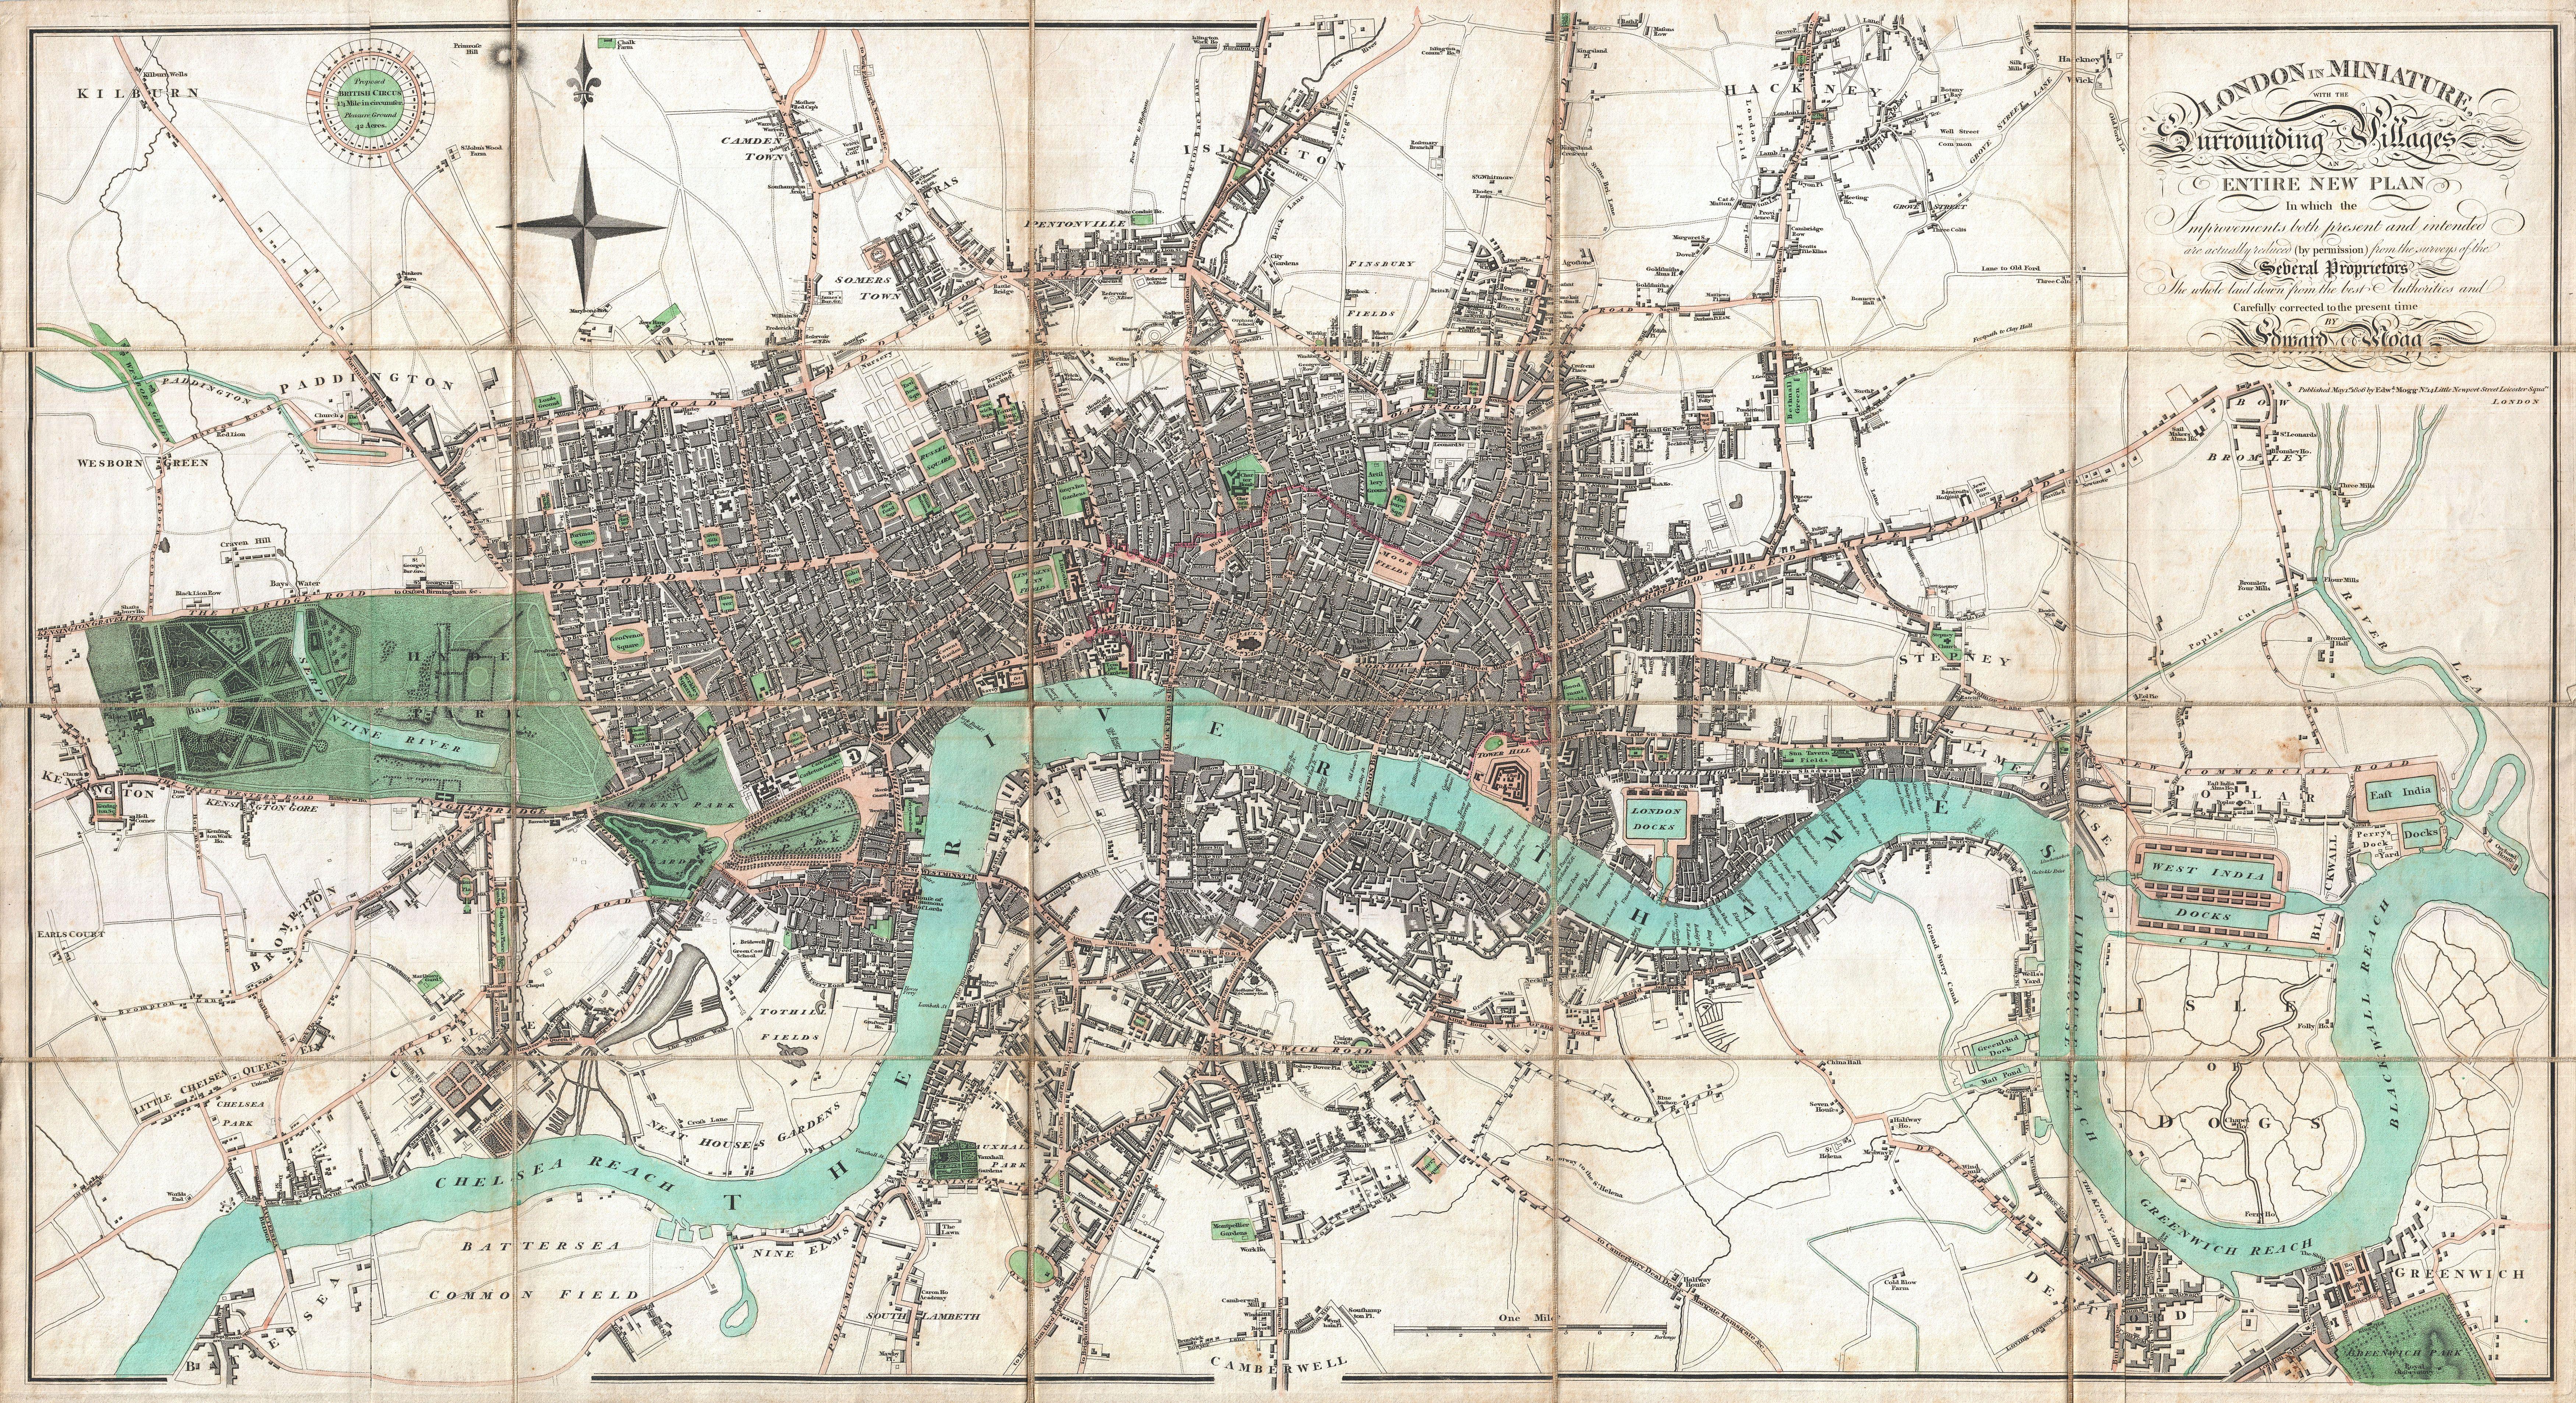 Downtown London England Map